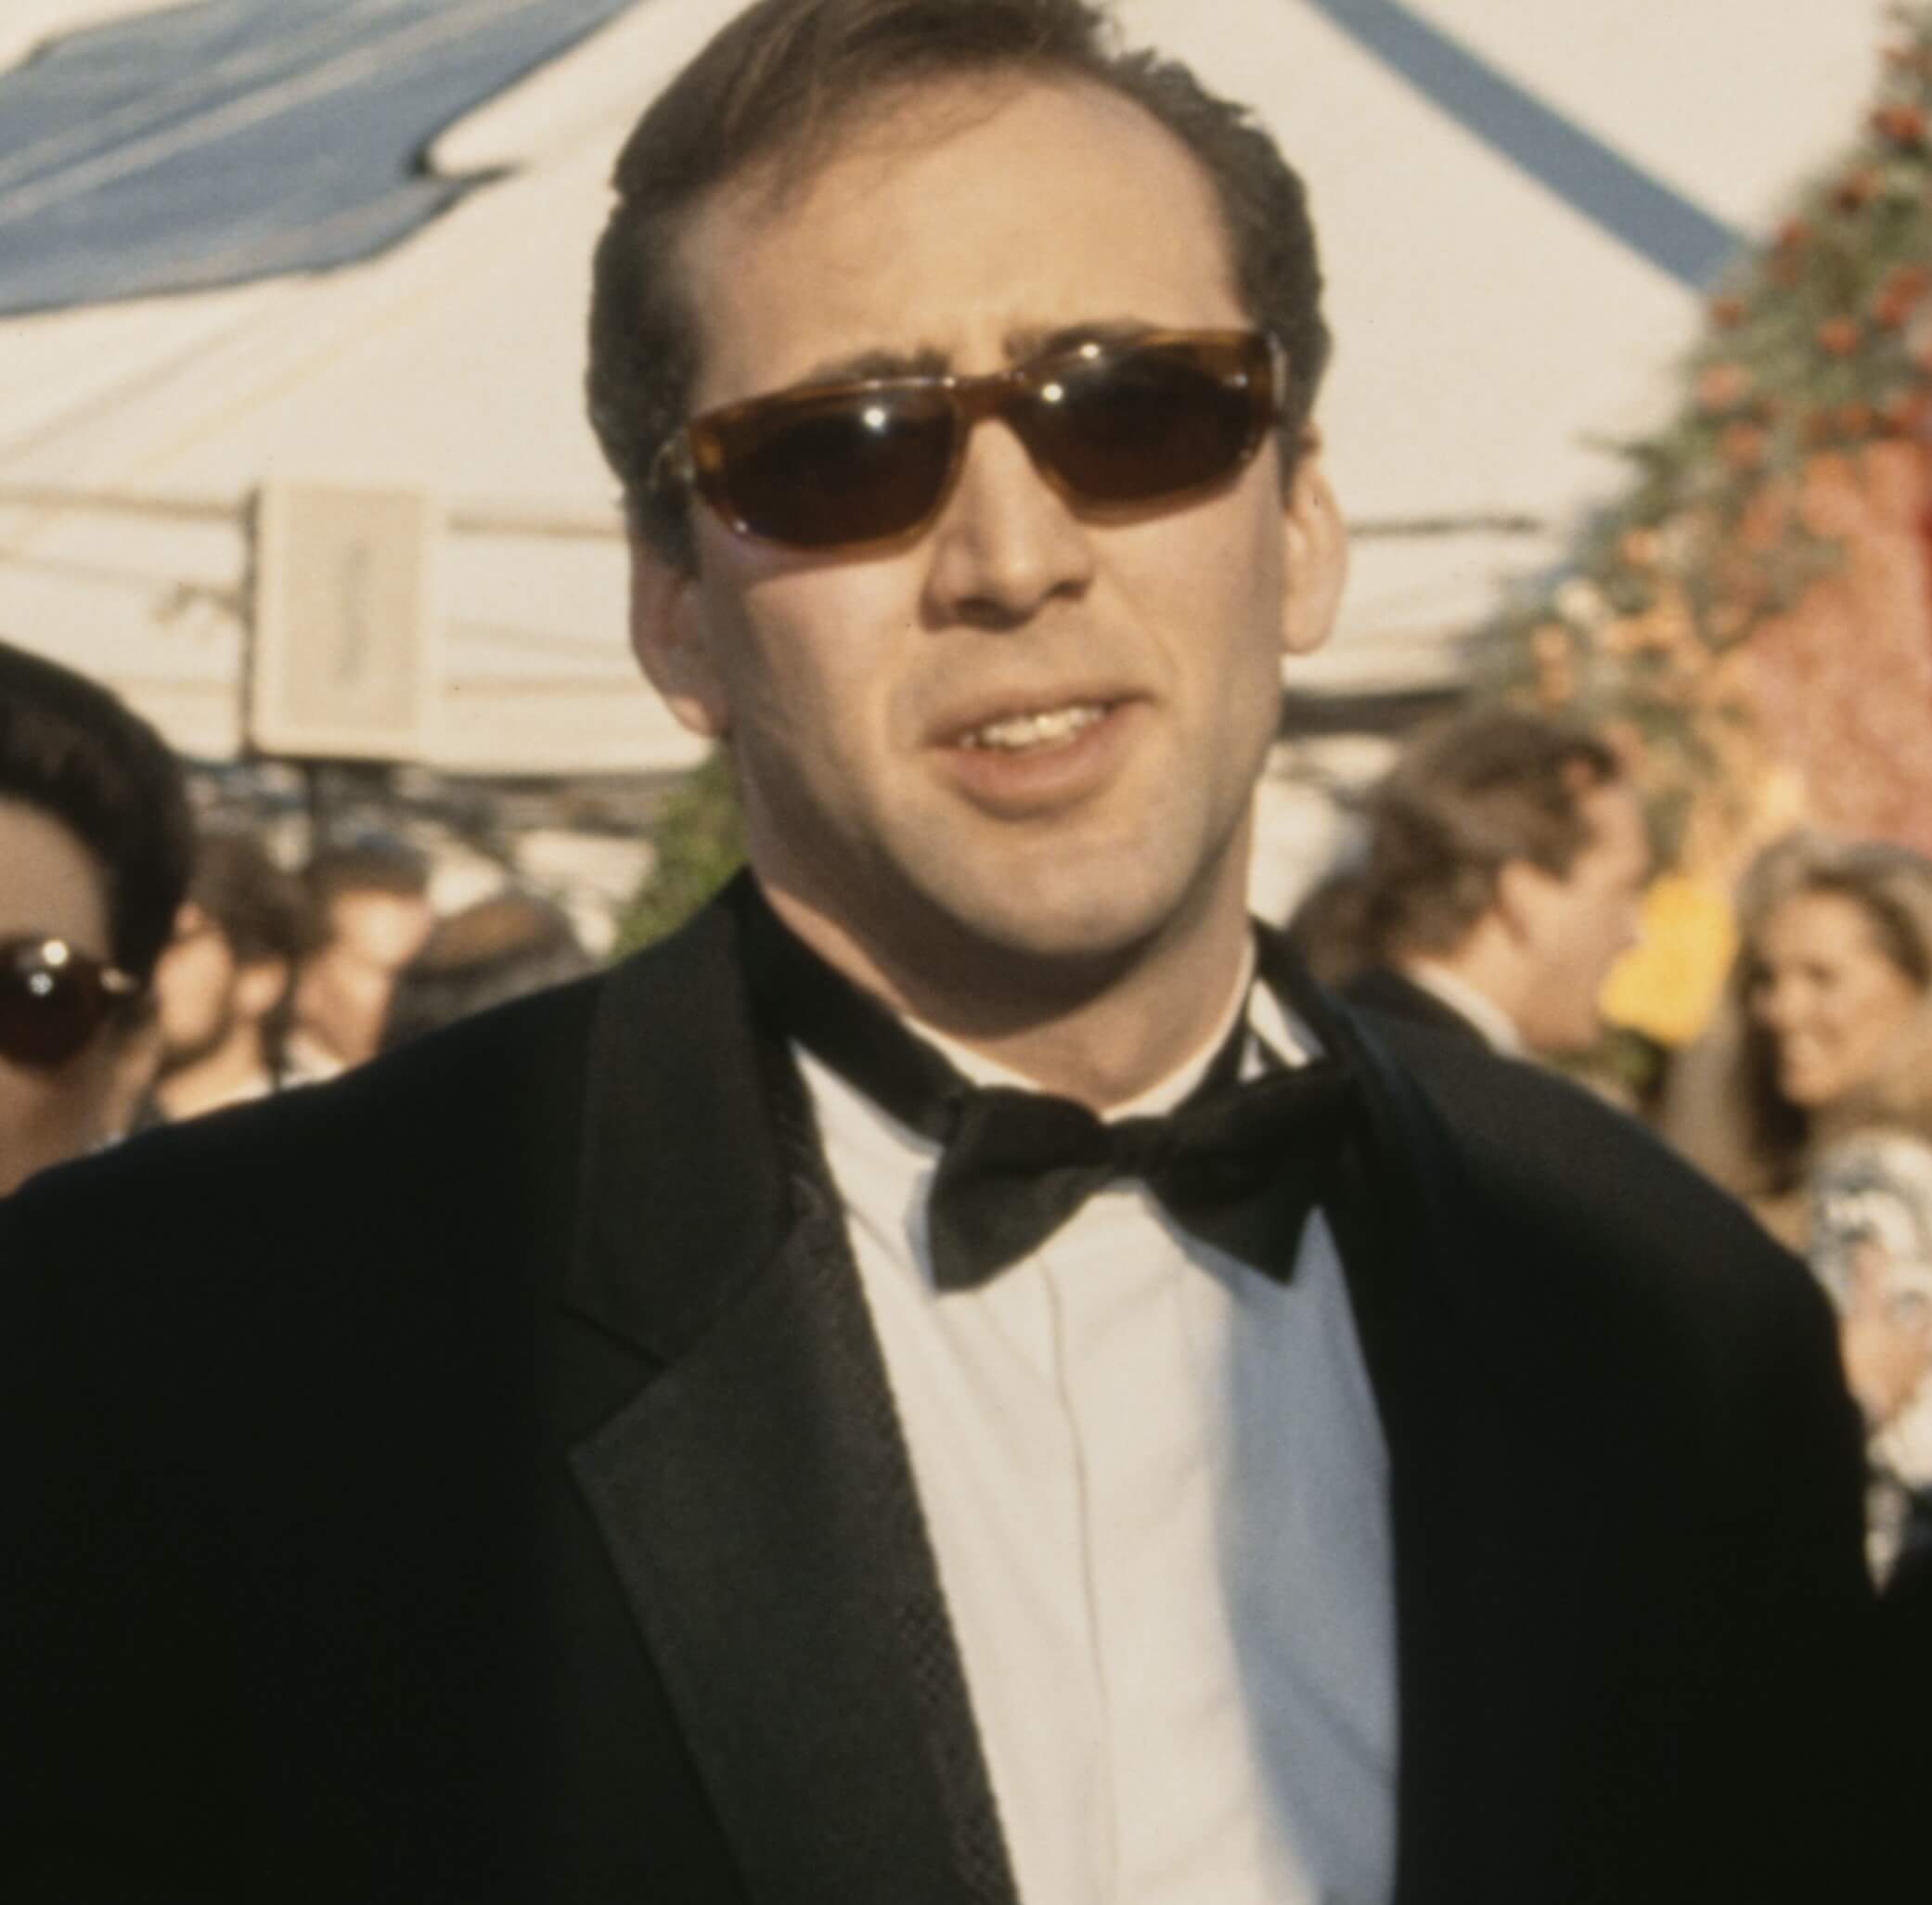 Nicolas Cage wearing a suit